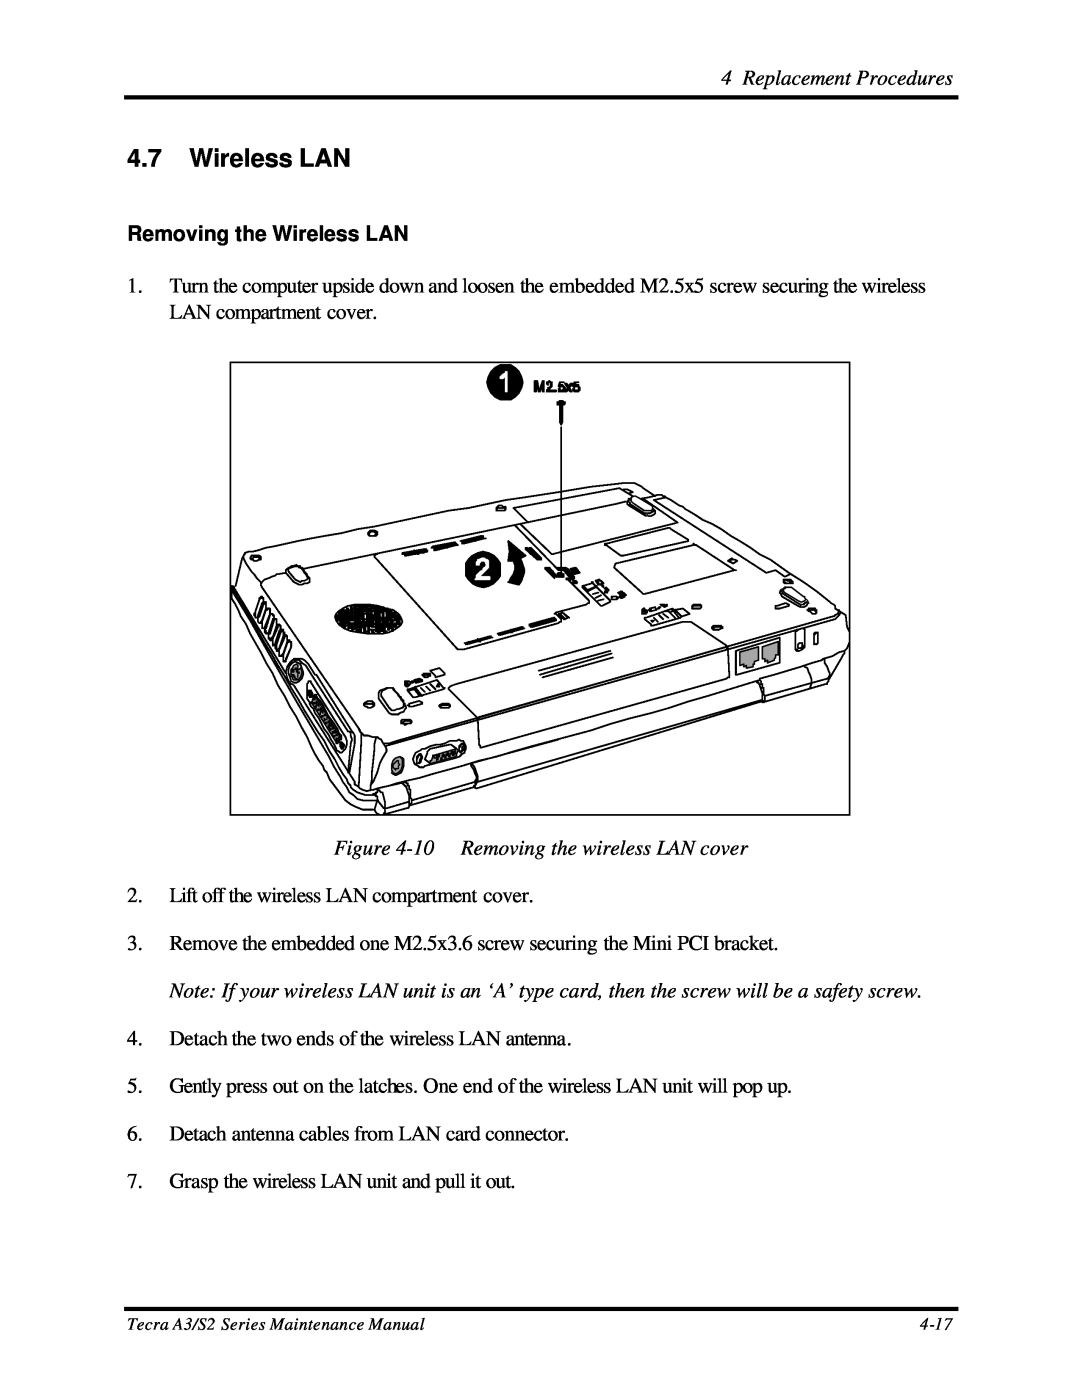 Toshiba S2 manual Removing the Wireless LAN, 10 Removing the wireless LAN cover, Replacement Procedures 